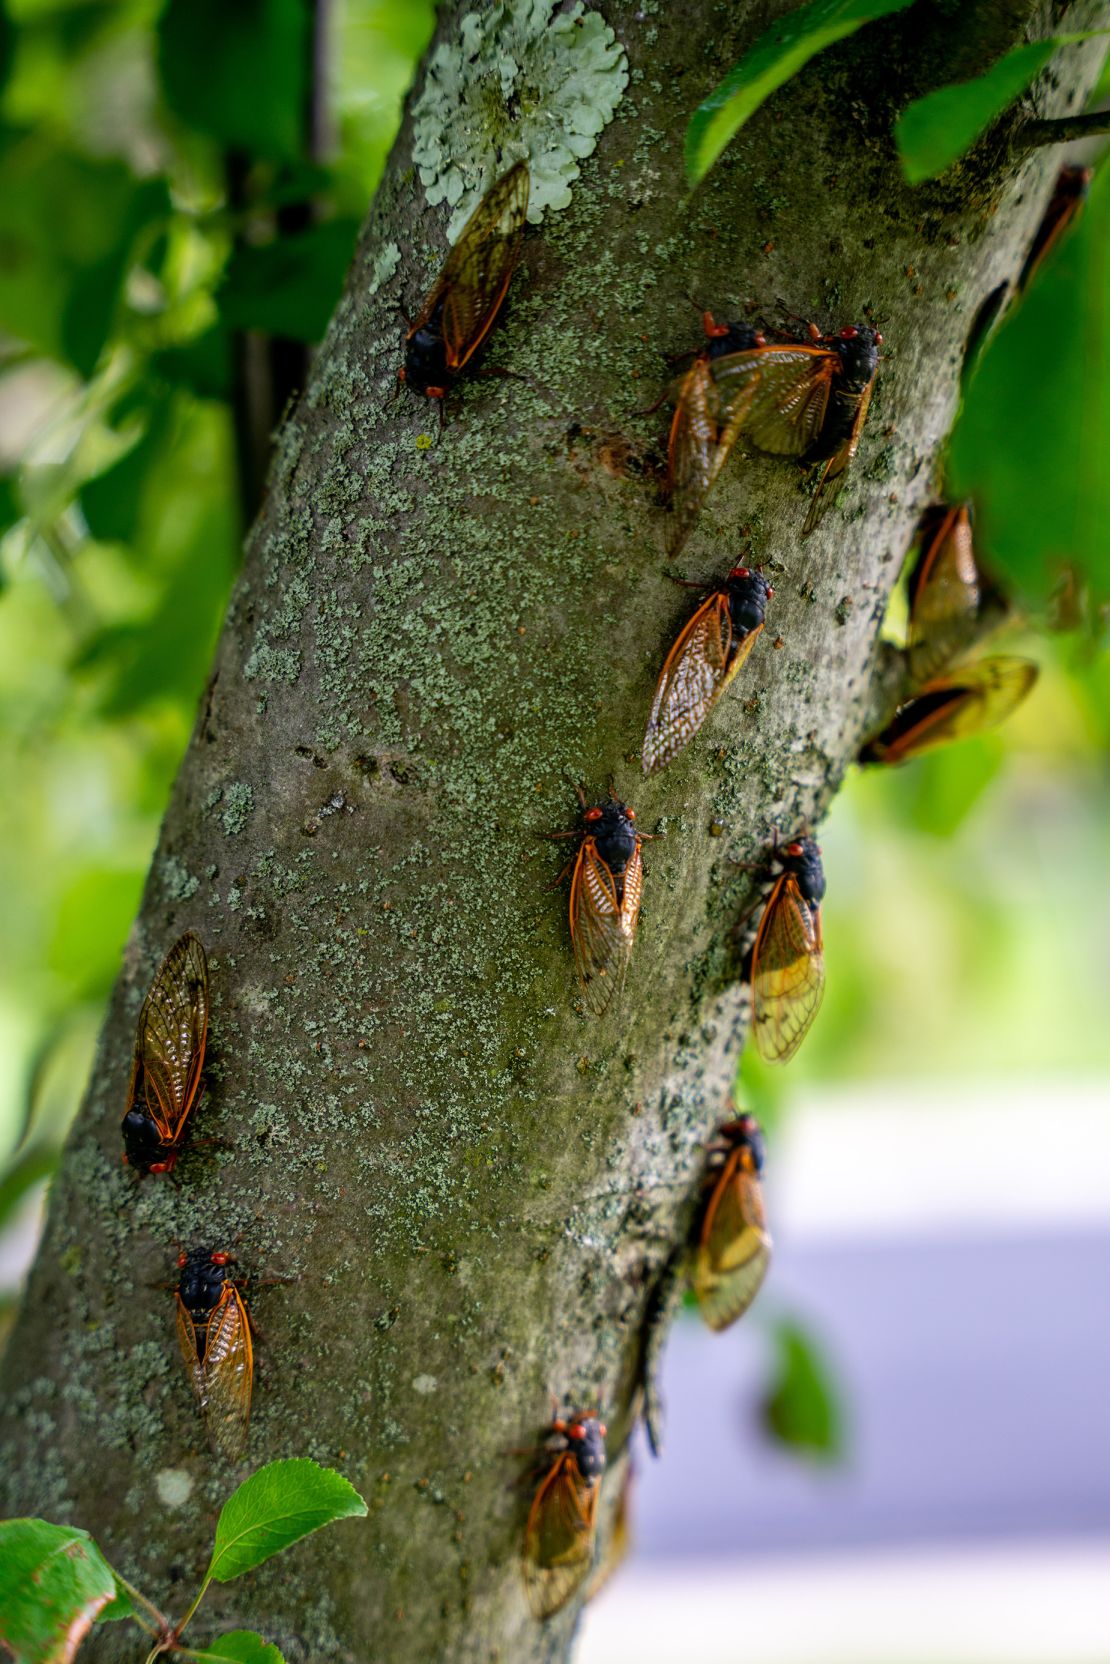 Cicadas don't bite or sting.